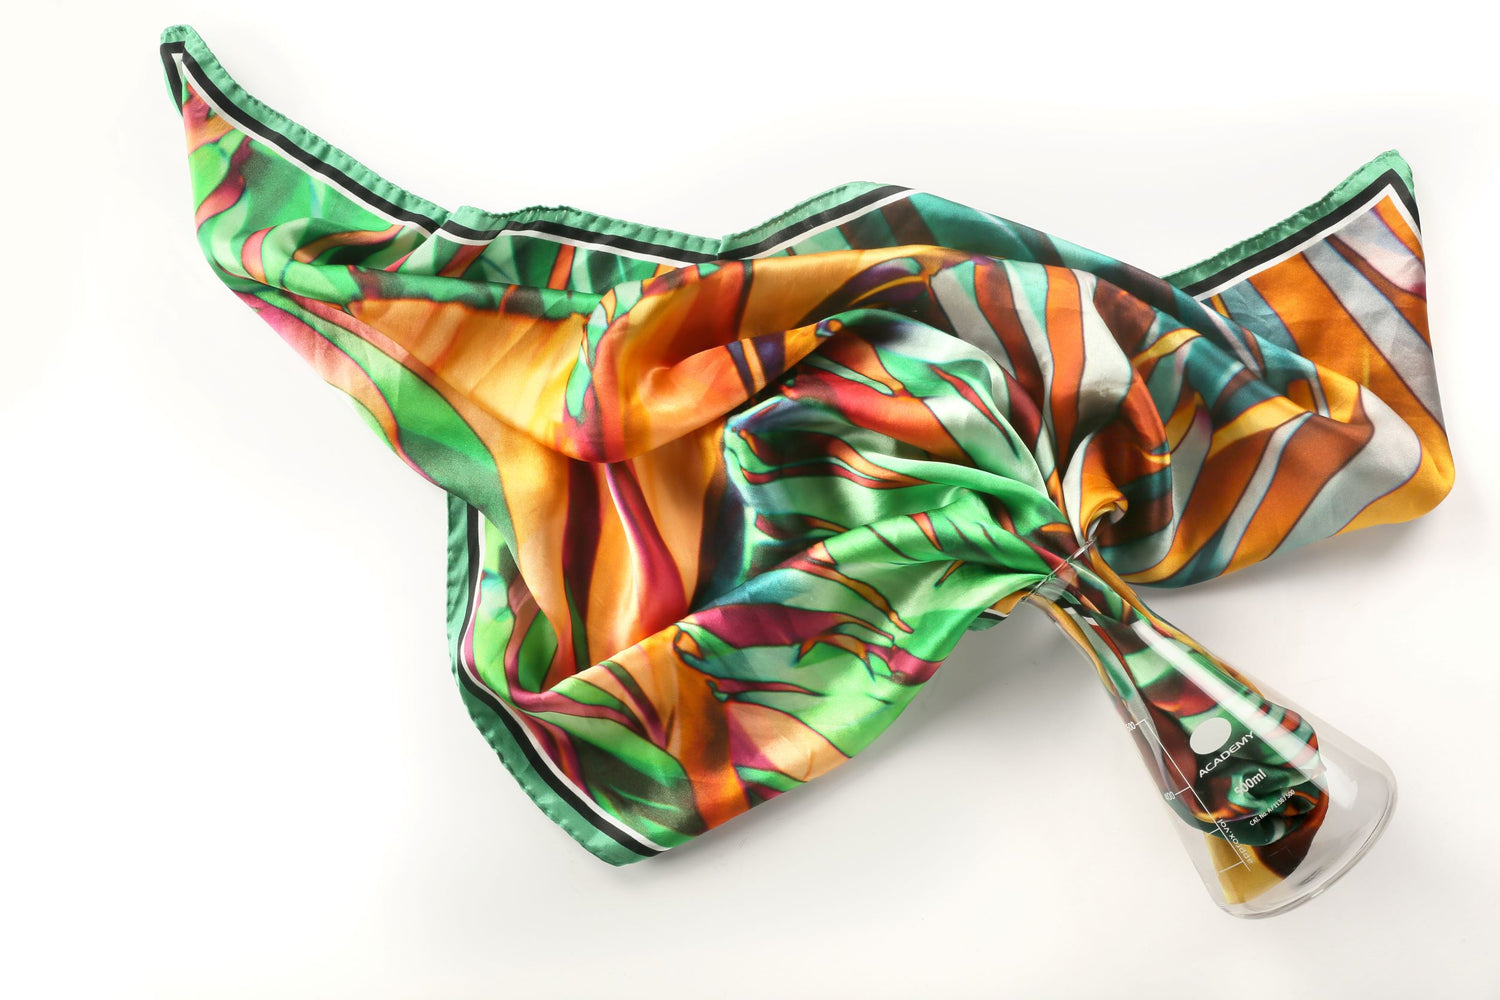 A By Biology leaf green luxury silk scarf displayed artistically emerging from a scientific flask